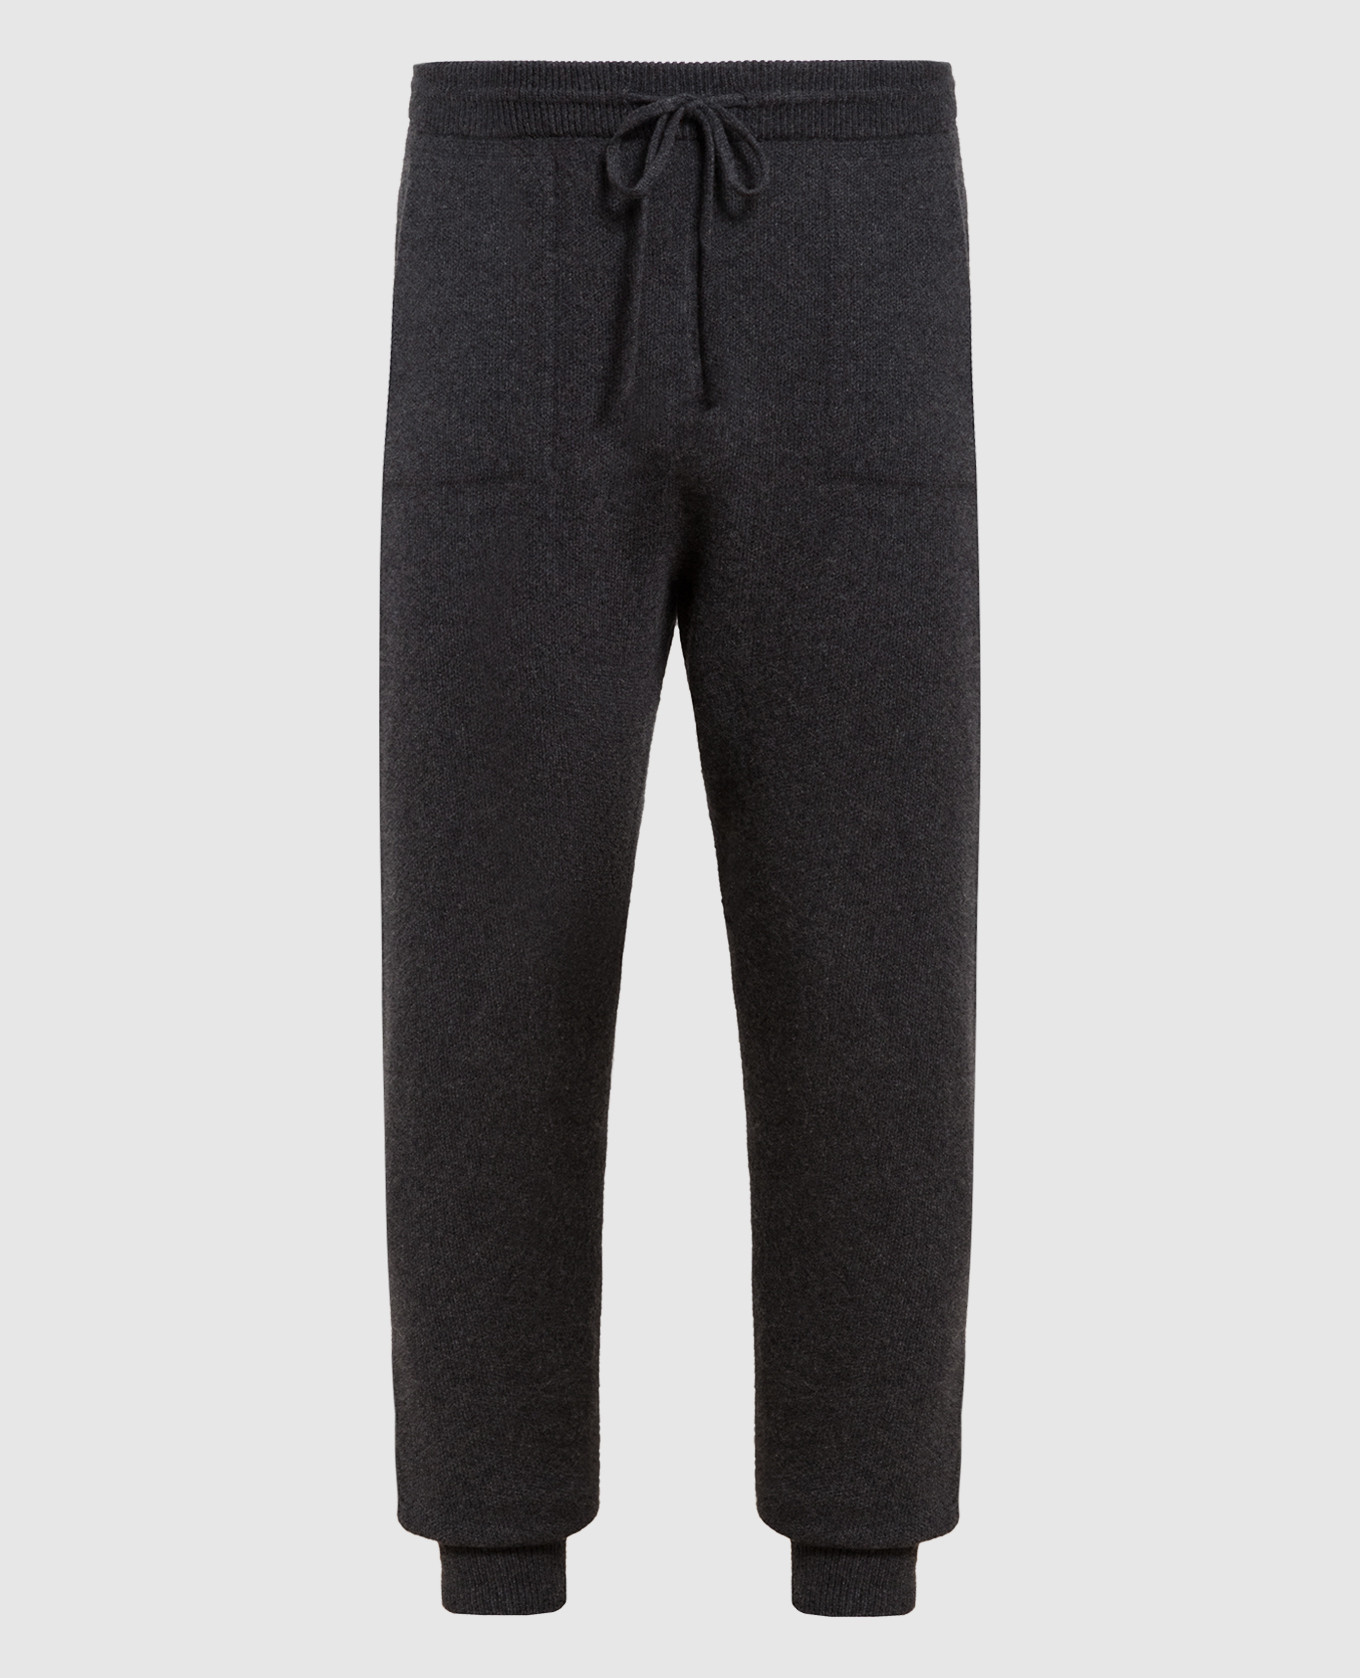 Gray cashmere sweatpants